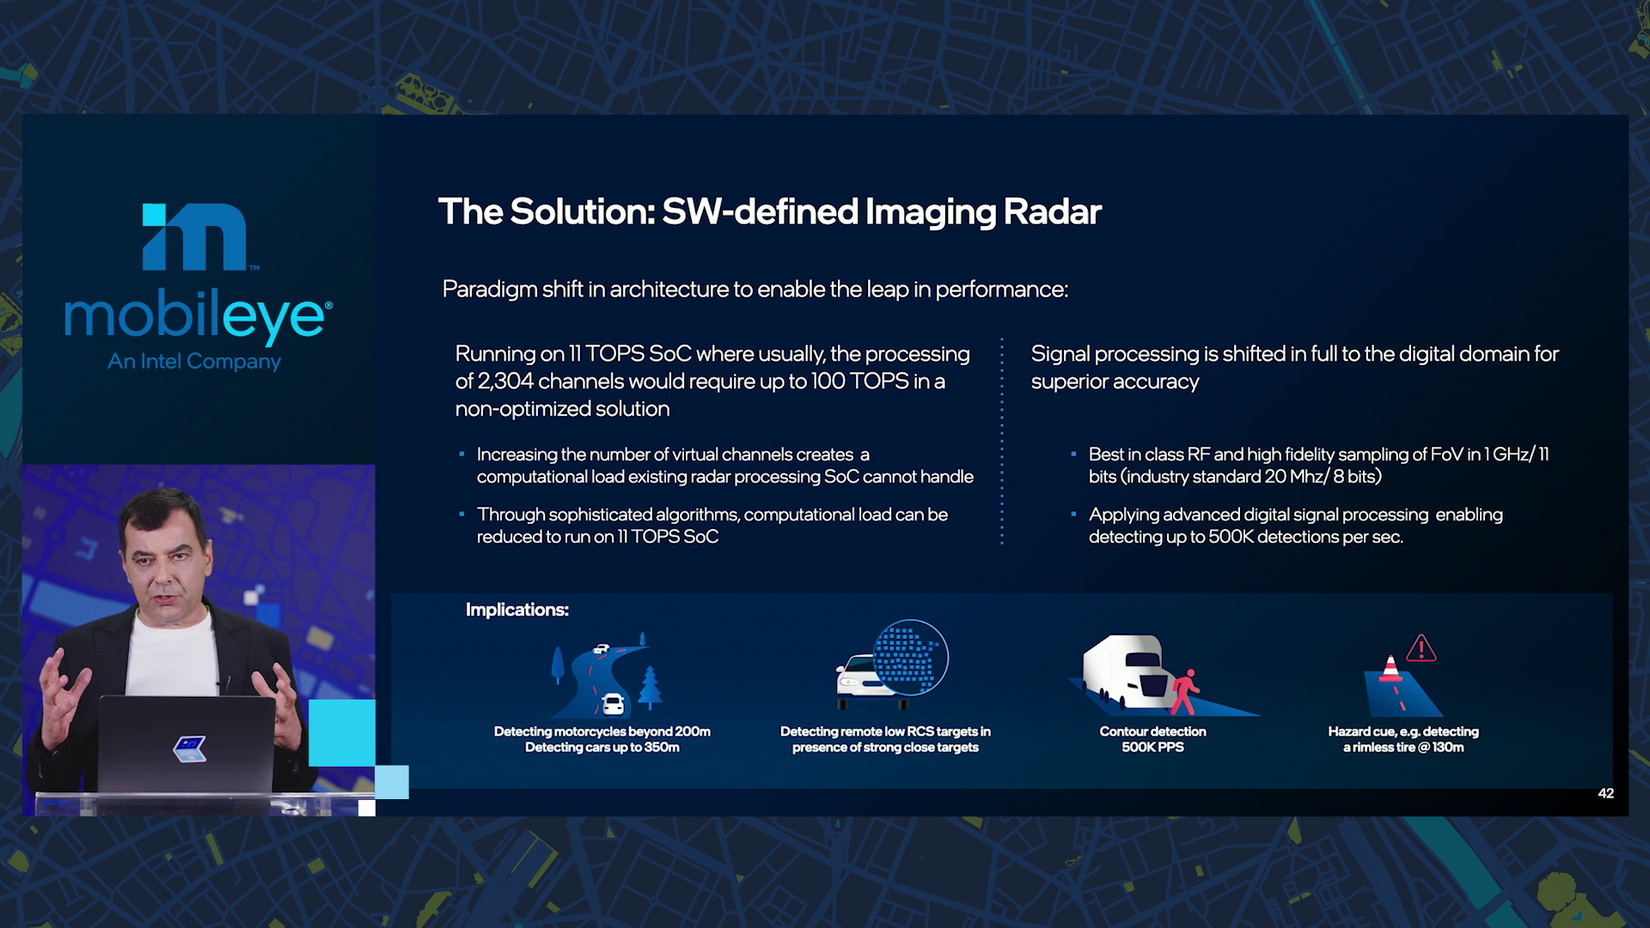 The solution: SW-defined imaging radar